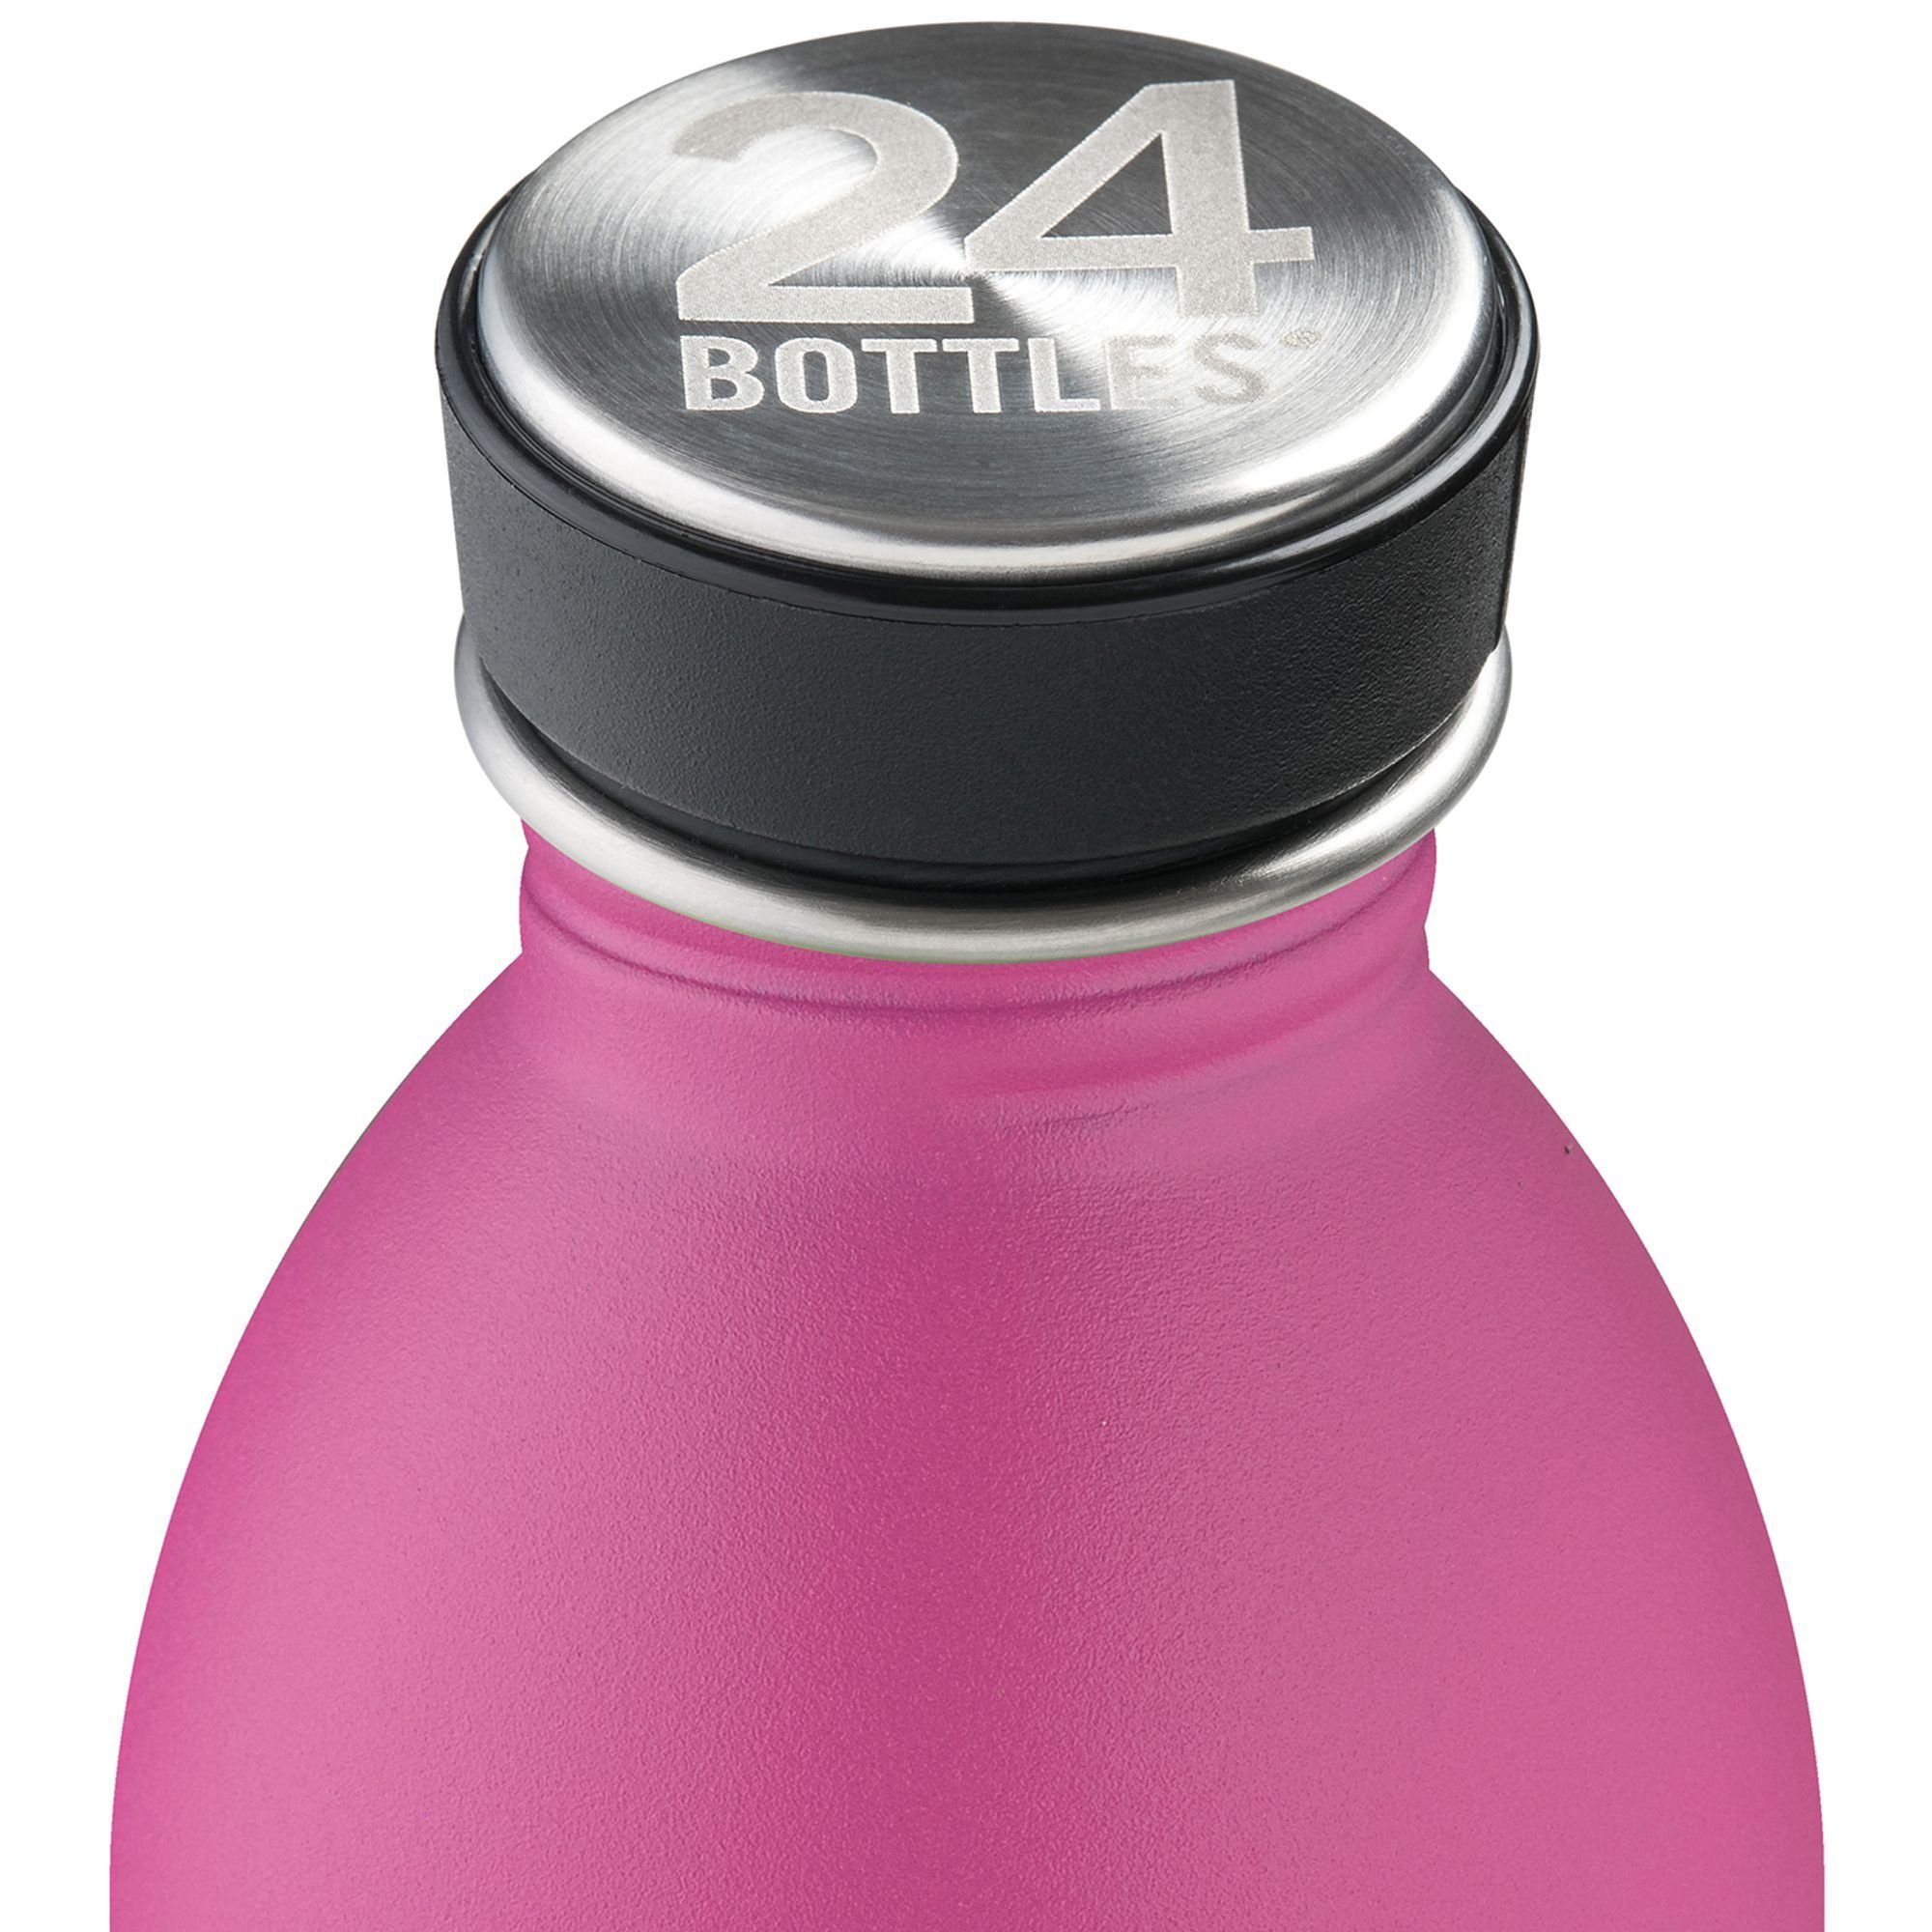 stone 24 Bottles pink passion Urban Trinkflasche